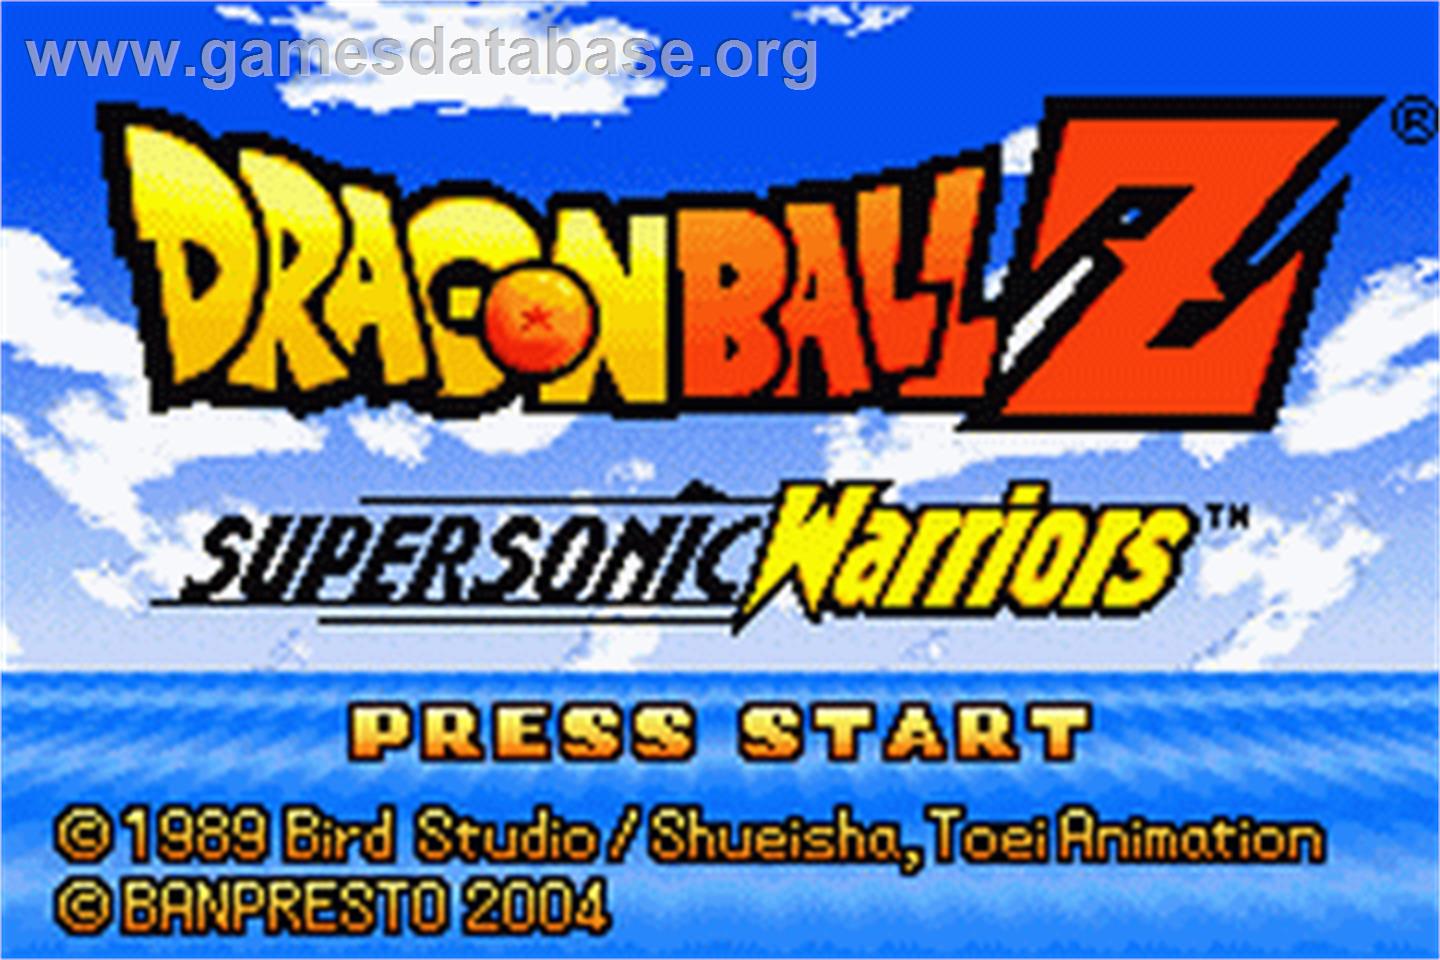 Dragonball Z: Supersonic Warriors - Nintendo Game Boy Advance - Artwork - Title Screen